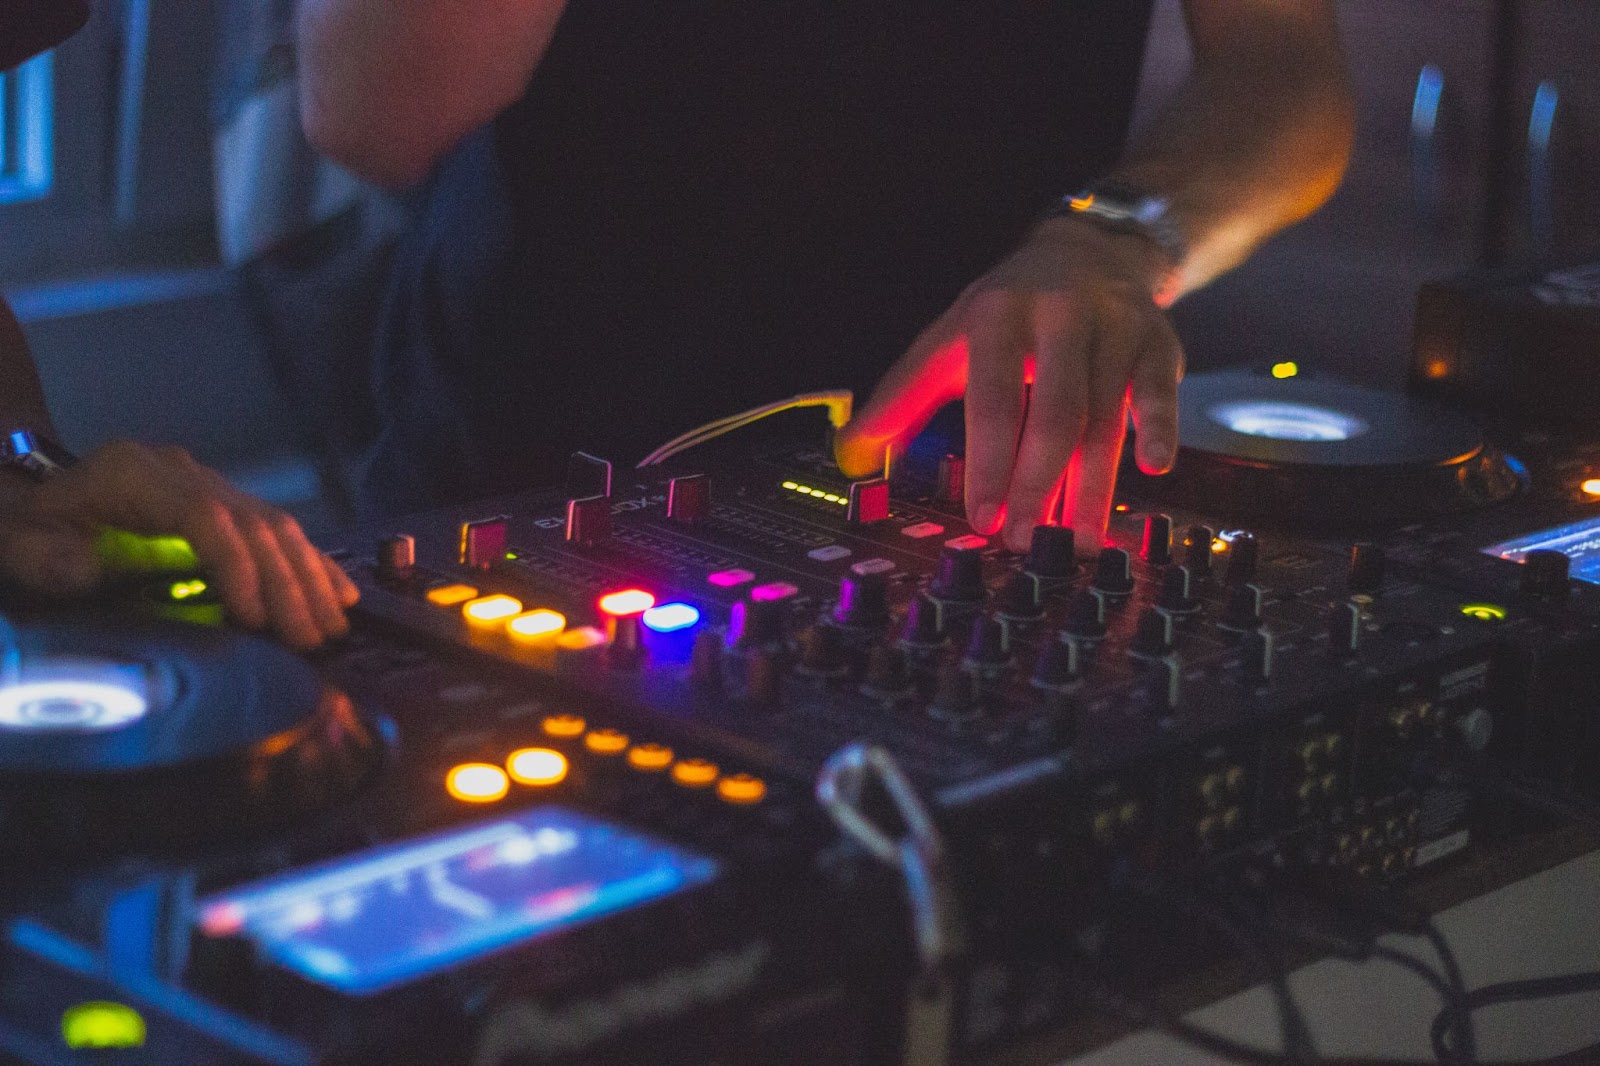 DJ mixing at rave using CDJ